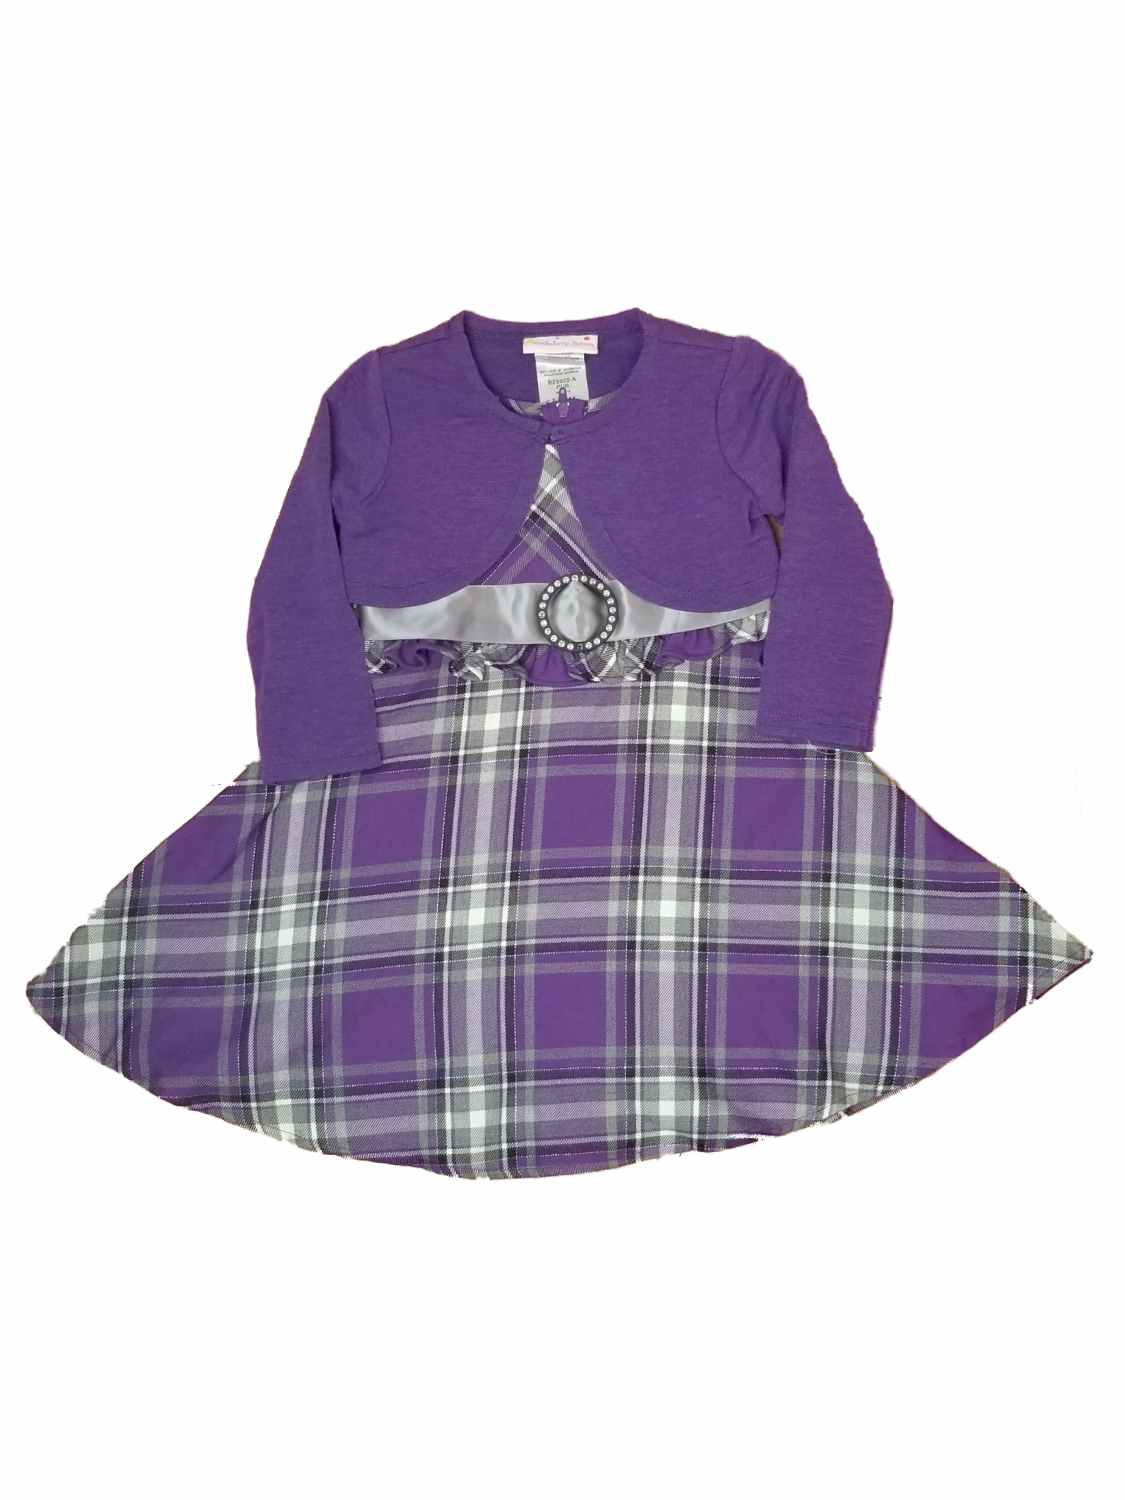 Ashley Ann Infant Girls Purple Plaid Bow Christmas Holiday Party Dress 24M